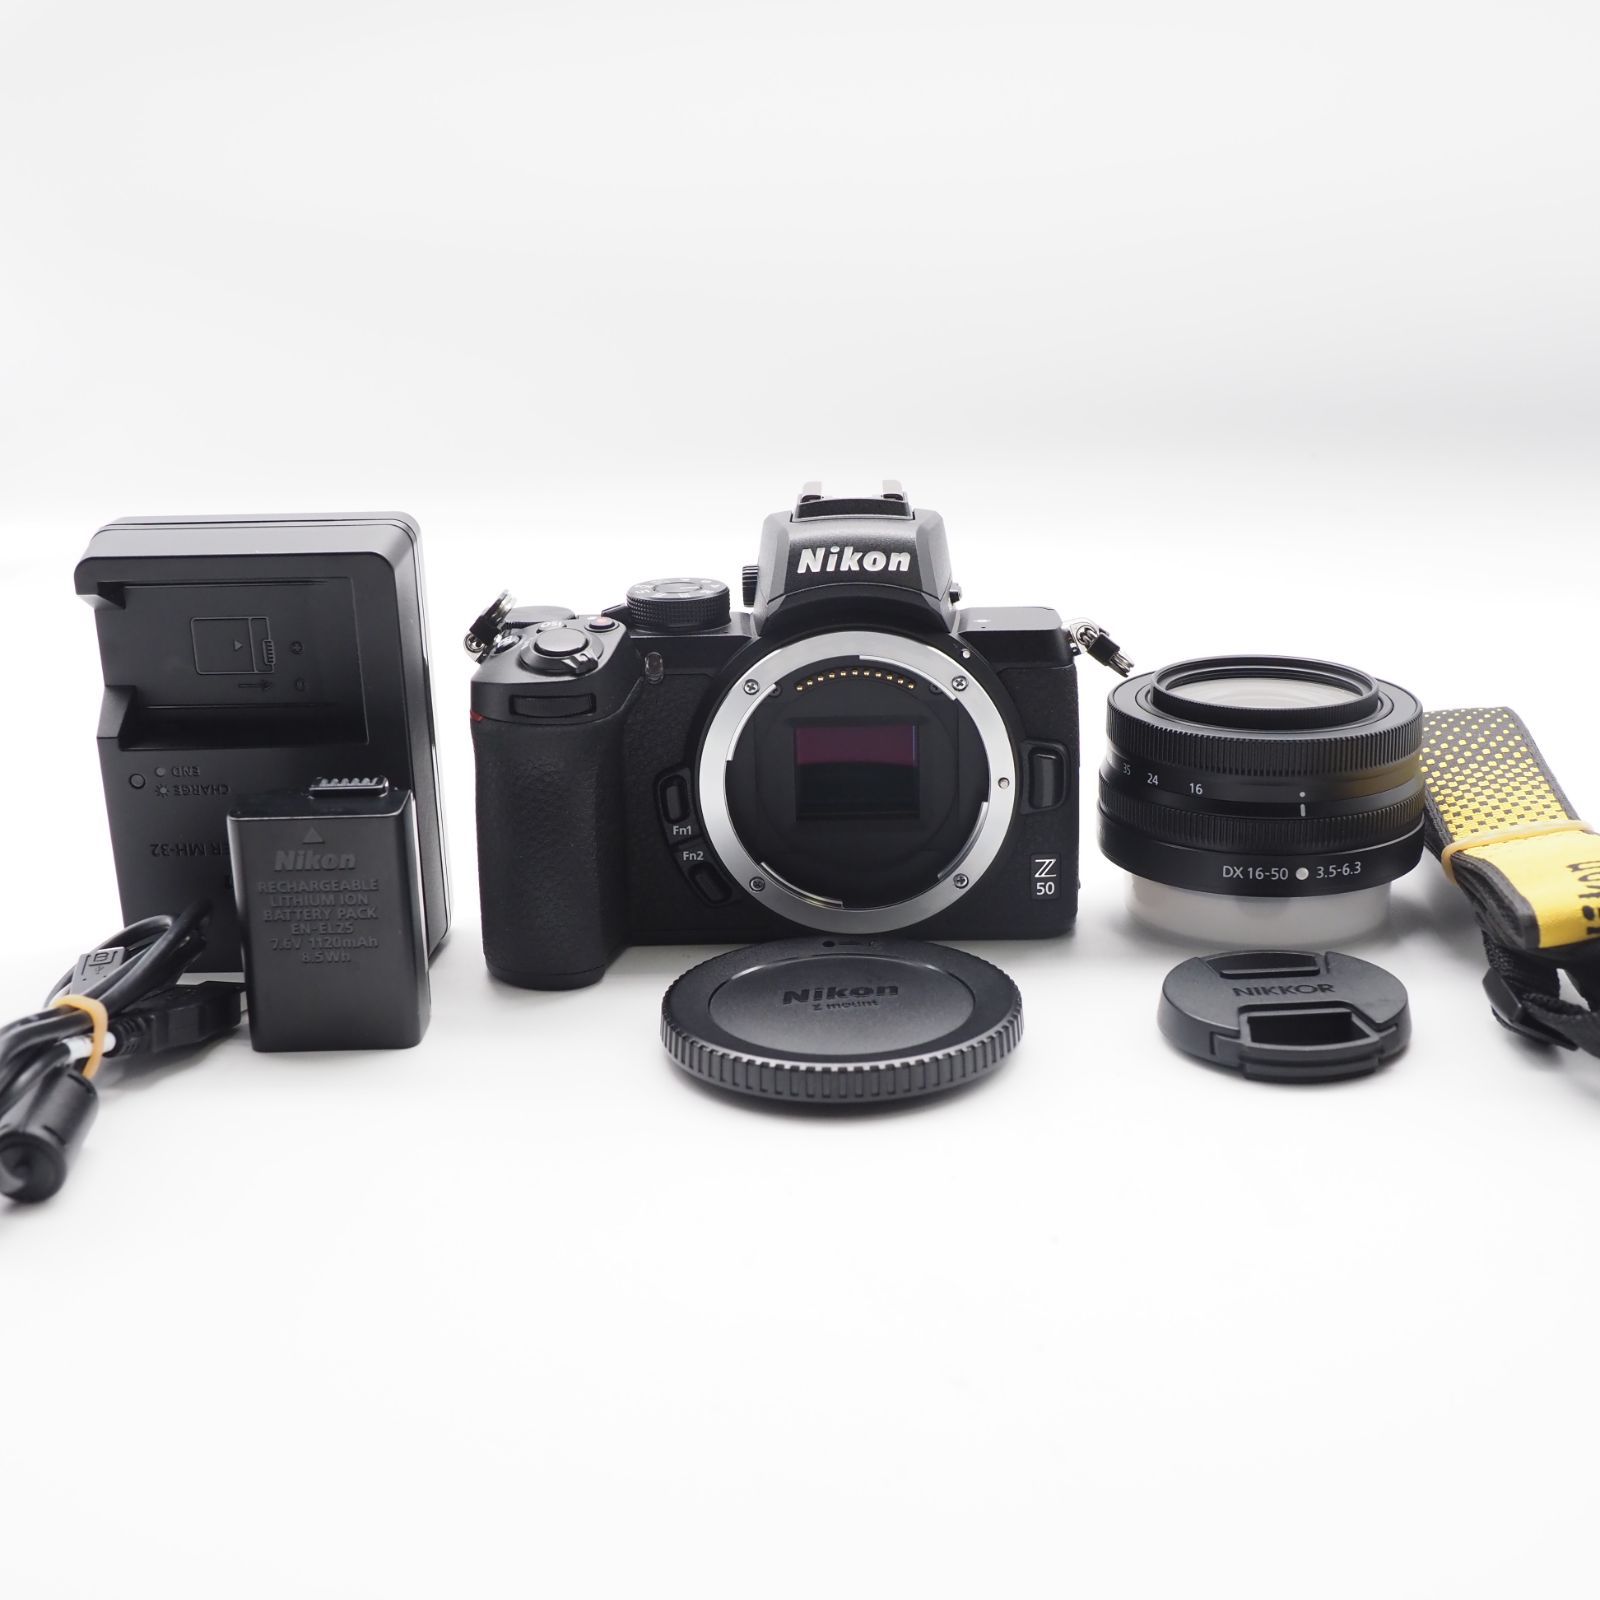 Nikon ミラーレス一眼カメラ Z50 レンズキット NIKKOR Z DX 16-50mm f